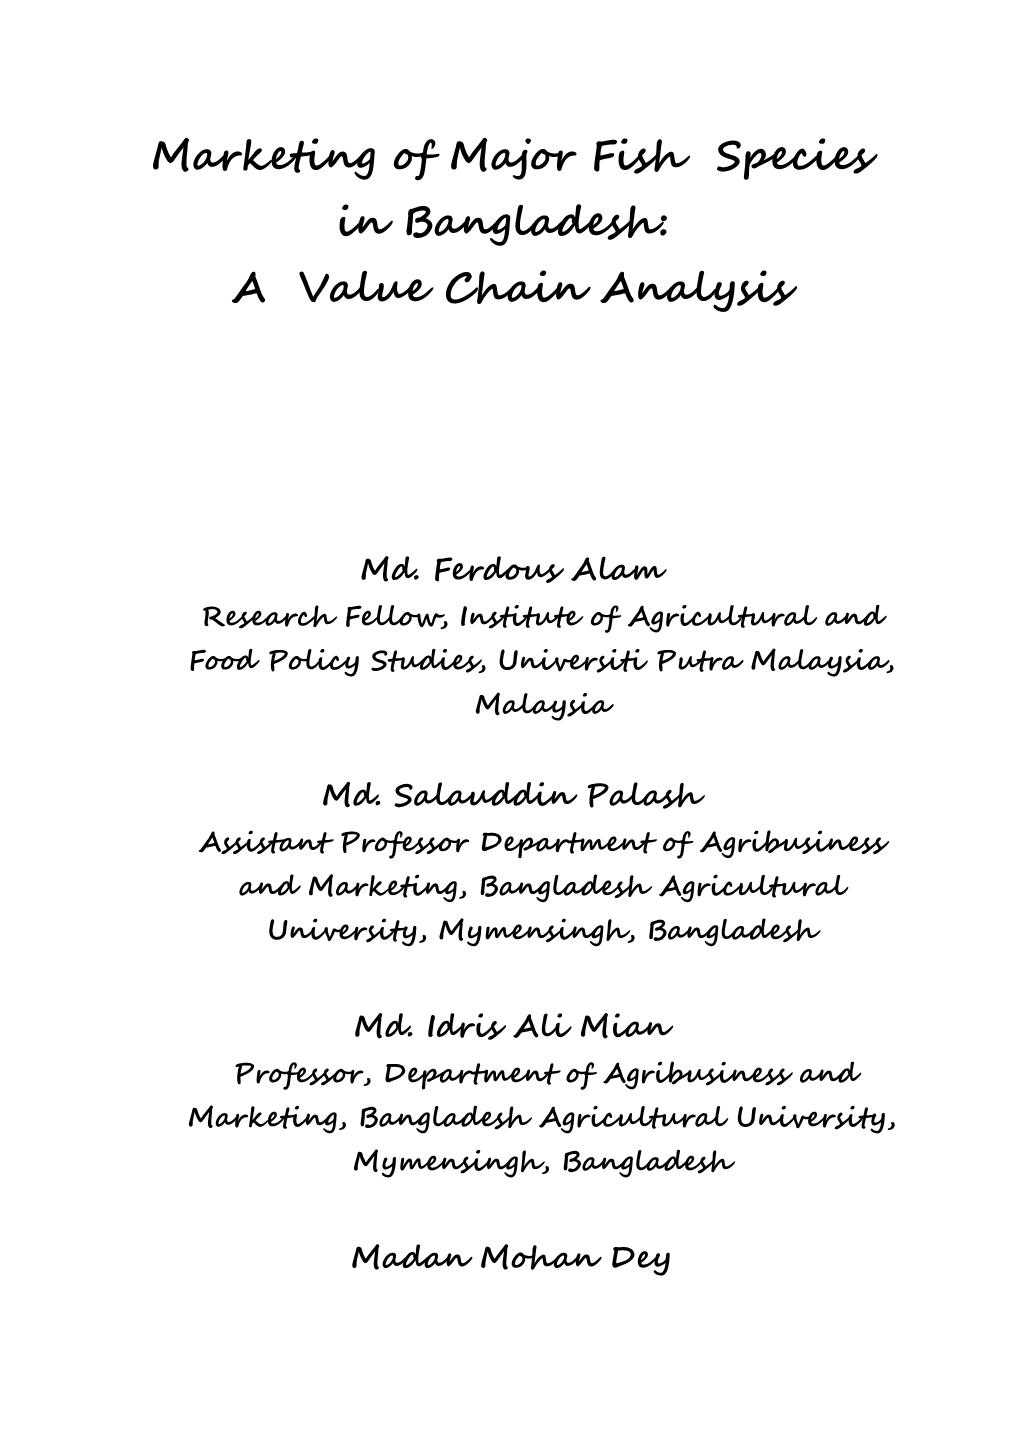 Value Chain Analysis of Fish Marketing in Bangladesh